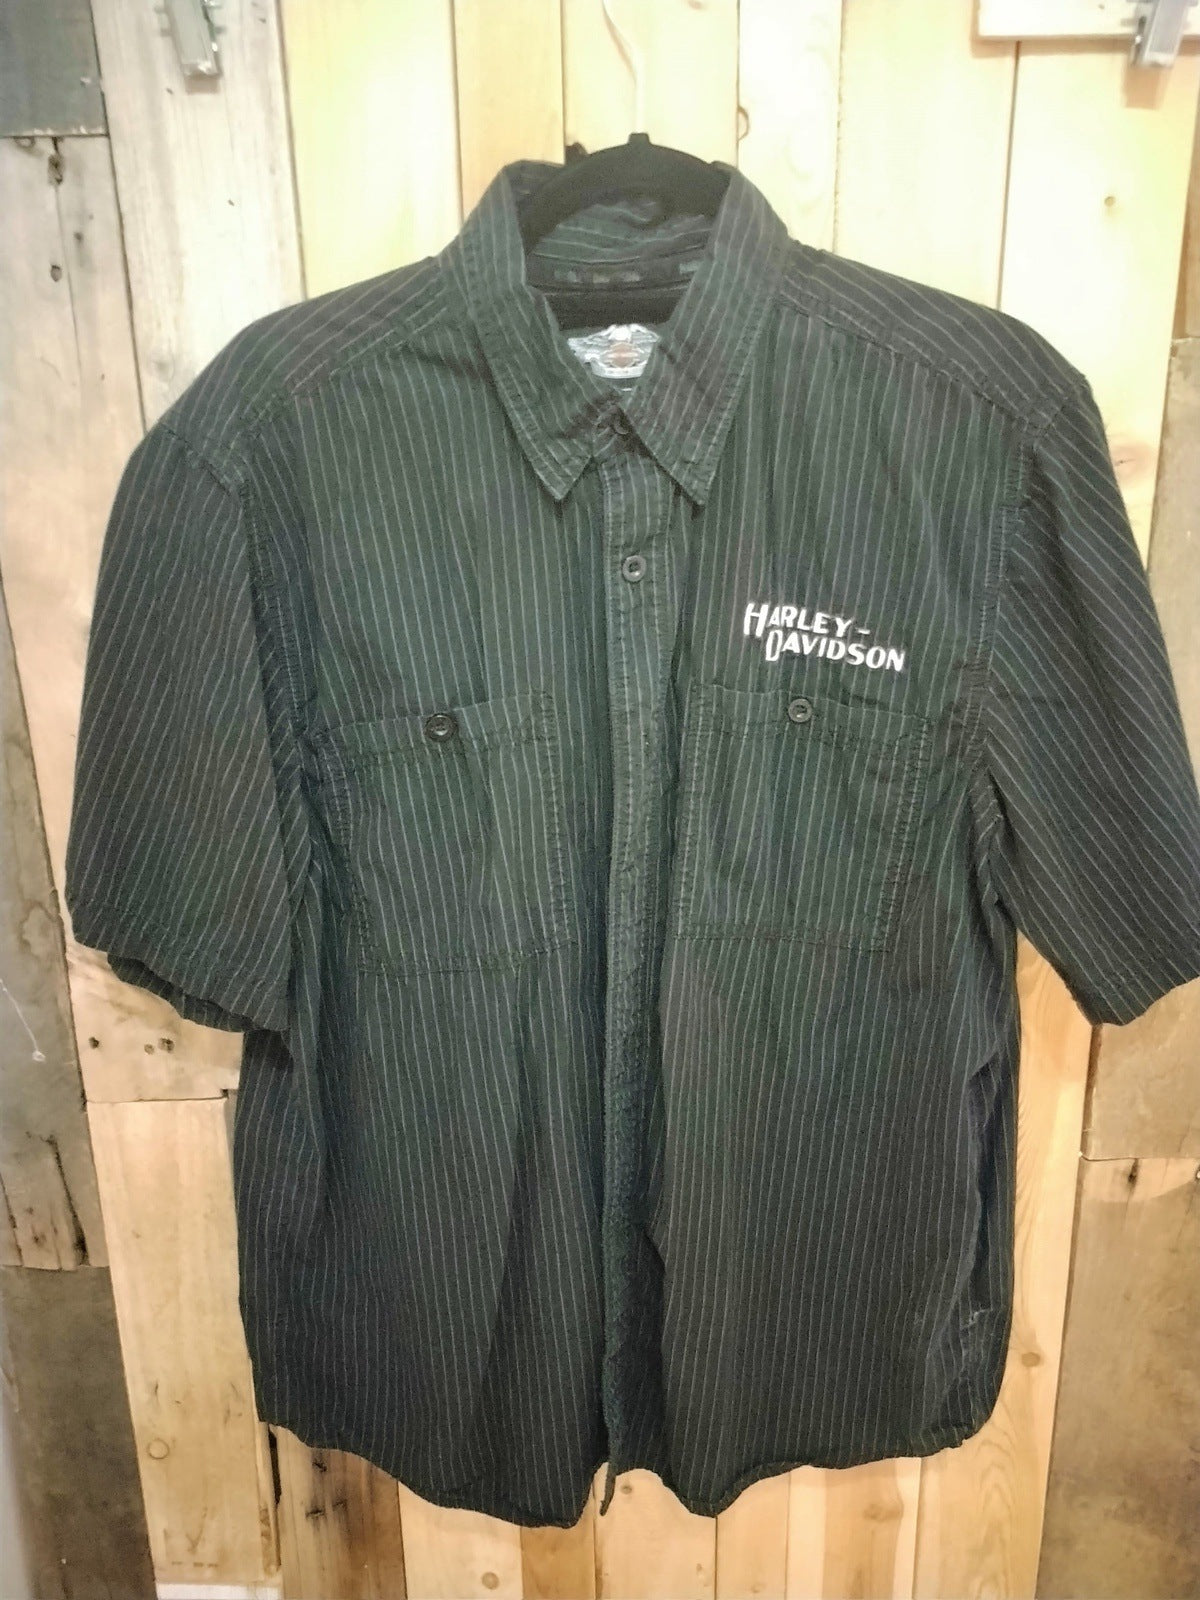 Harley Davidson Men's Pint Stripe Short Sleeve Button Up Shirt Size Large